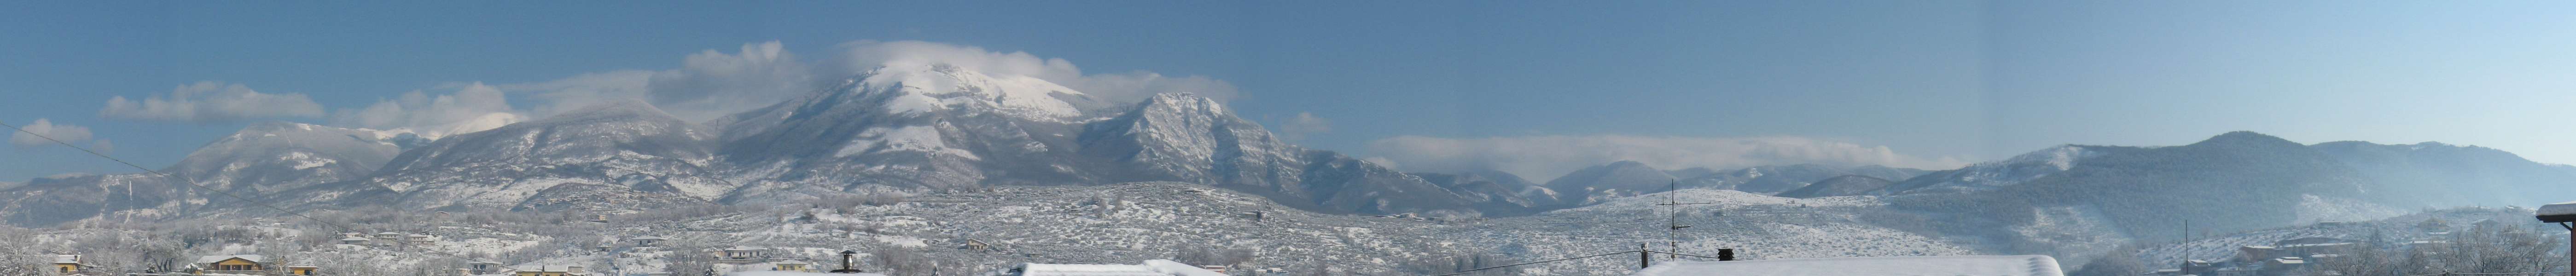 Panoramica neve feb 2012 web.jpg